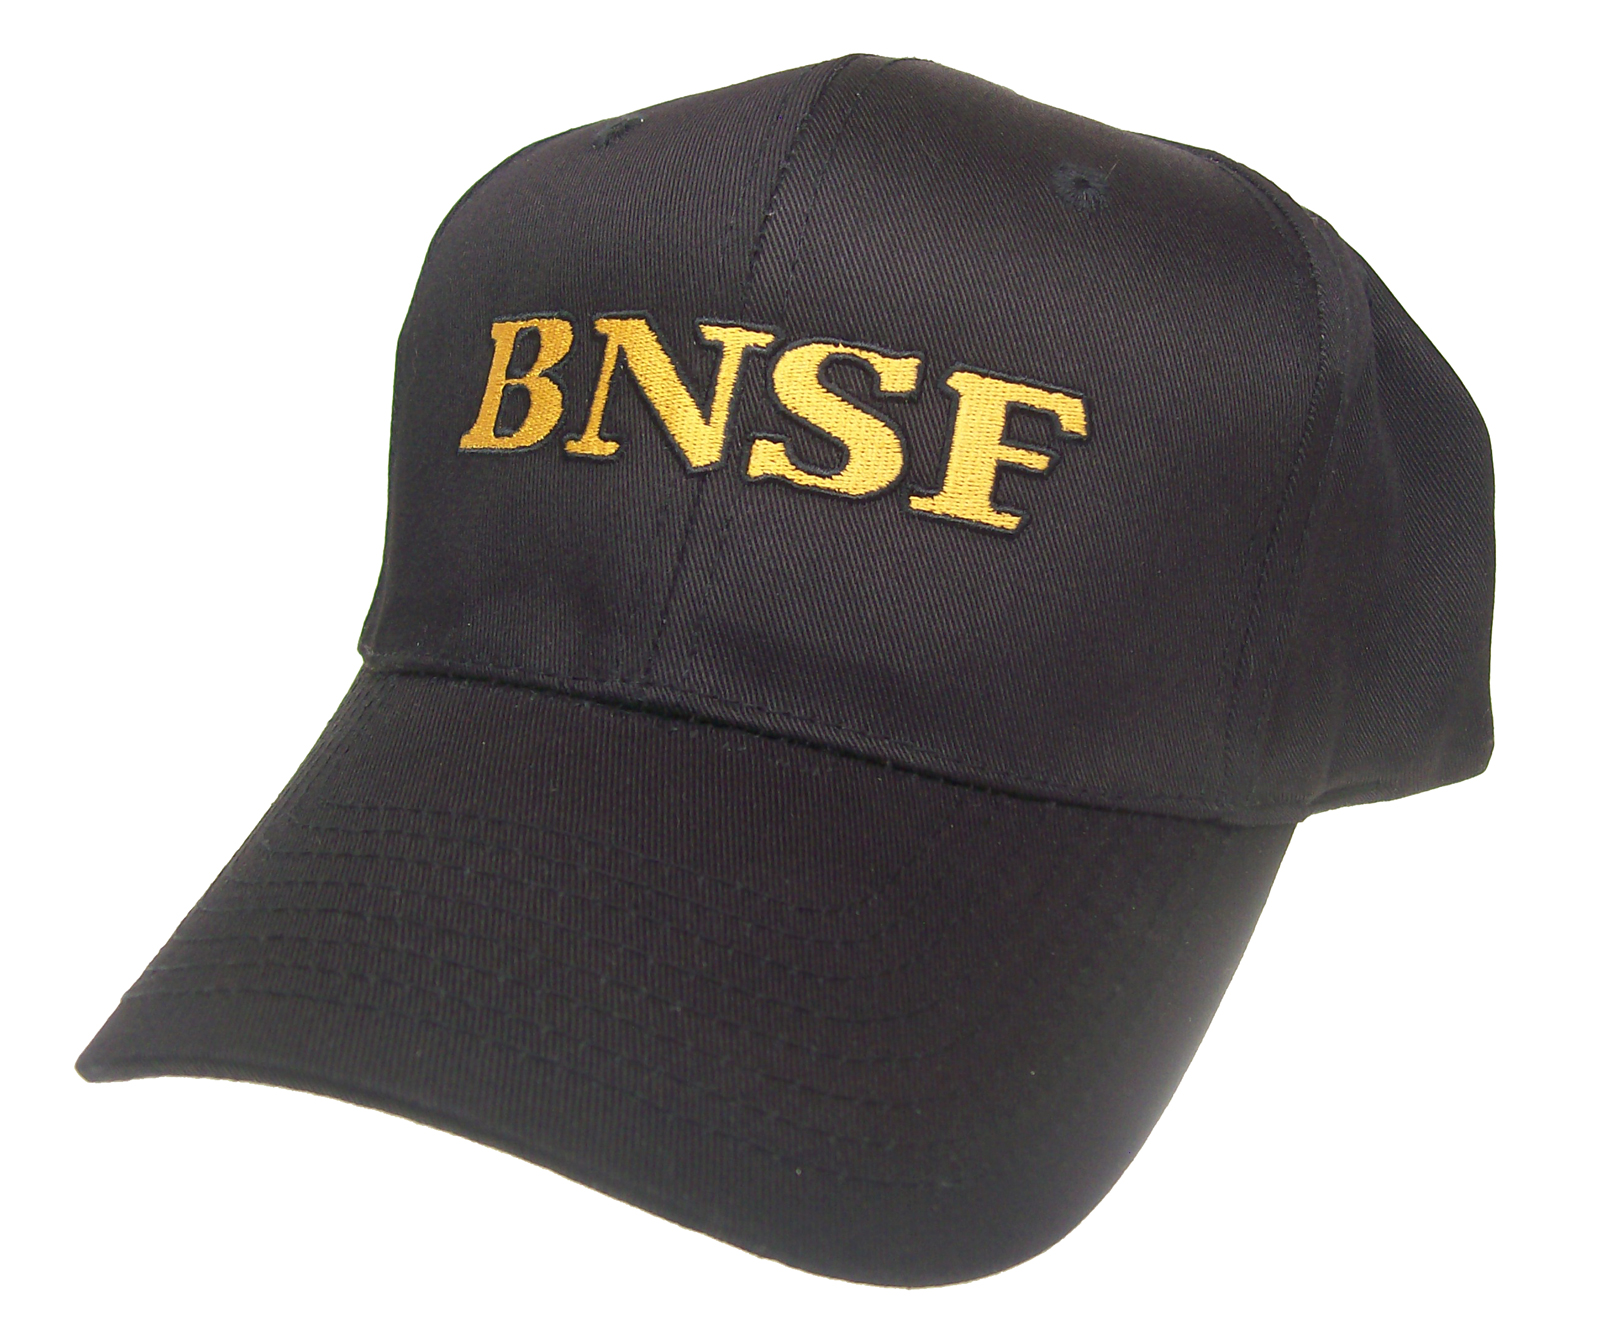 BNSF Railway Railroad Embroidered Cap Hat 40-7400